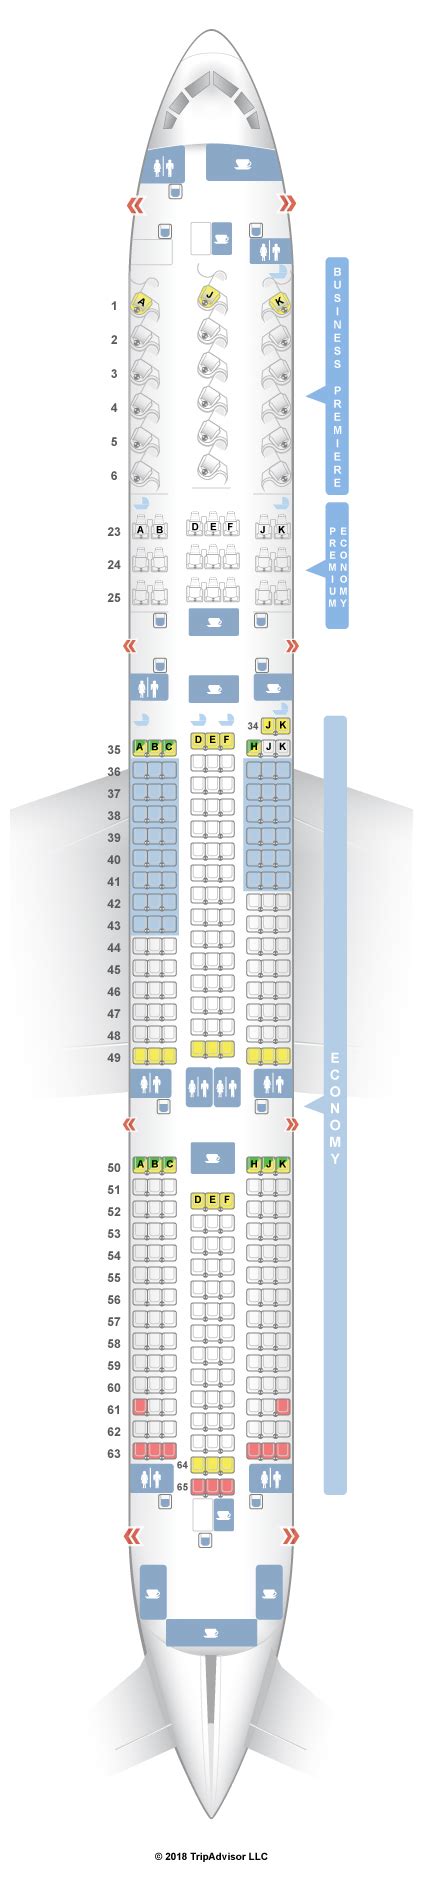 Seatguru Seat Map Air New Zealand Boeing 787 9 789 Layout 1